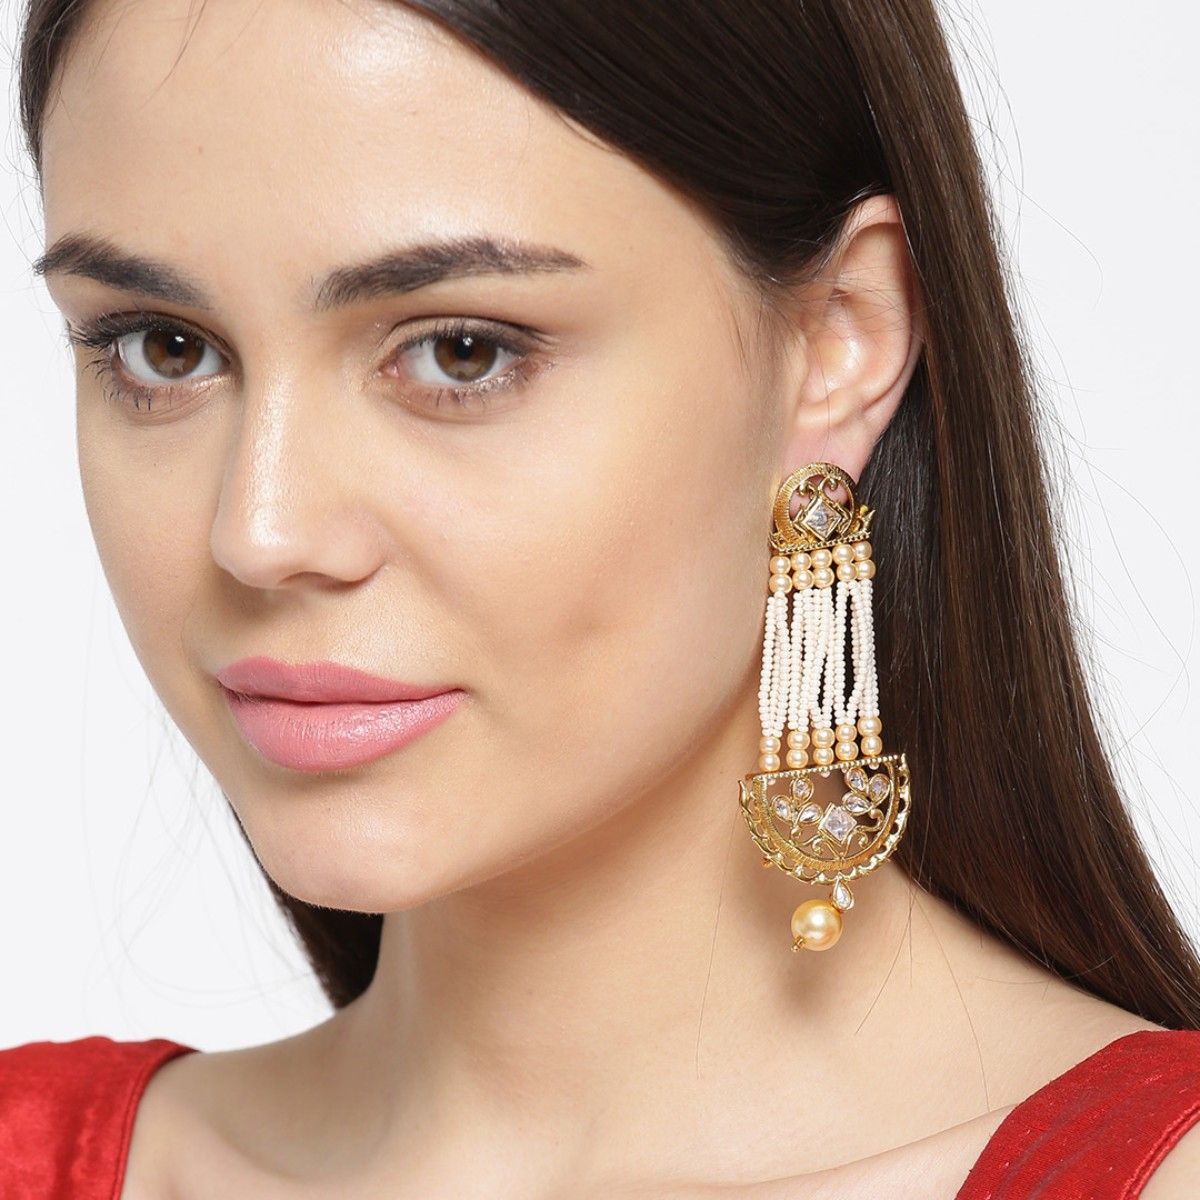 Aggregate more than 146 girls long earrings